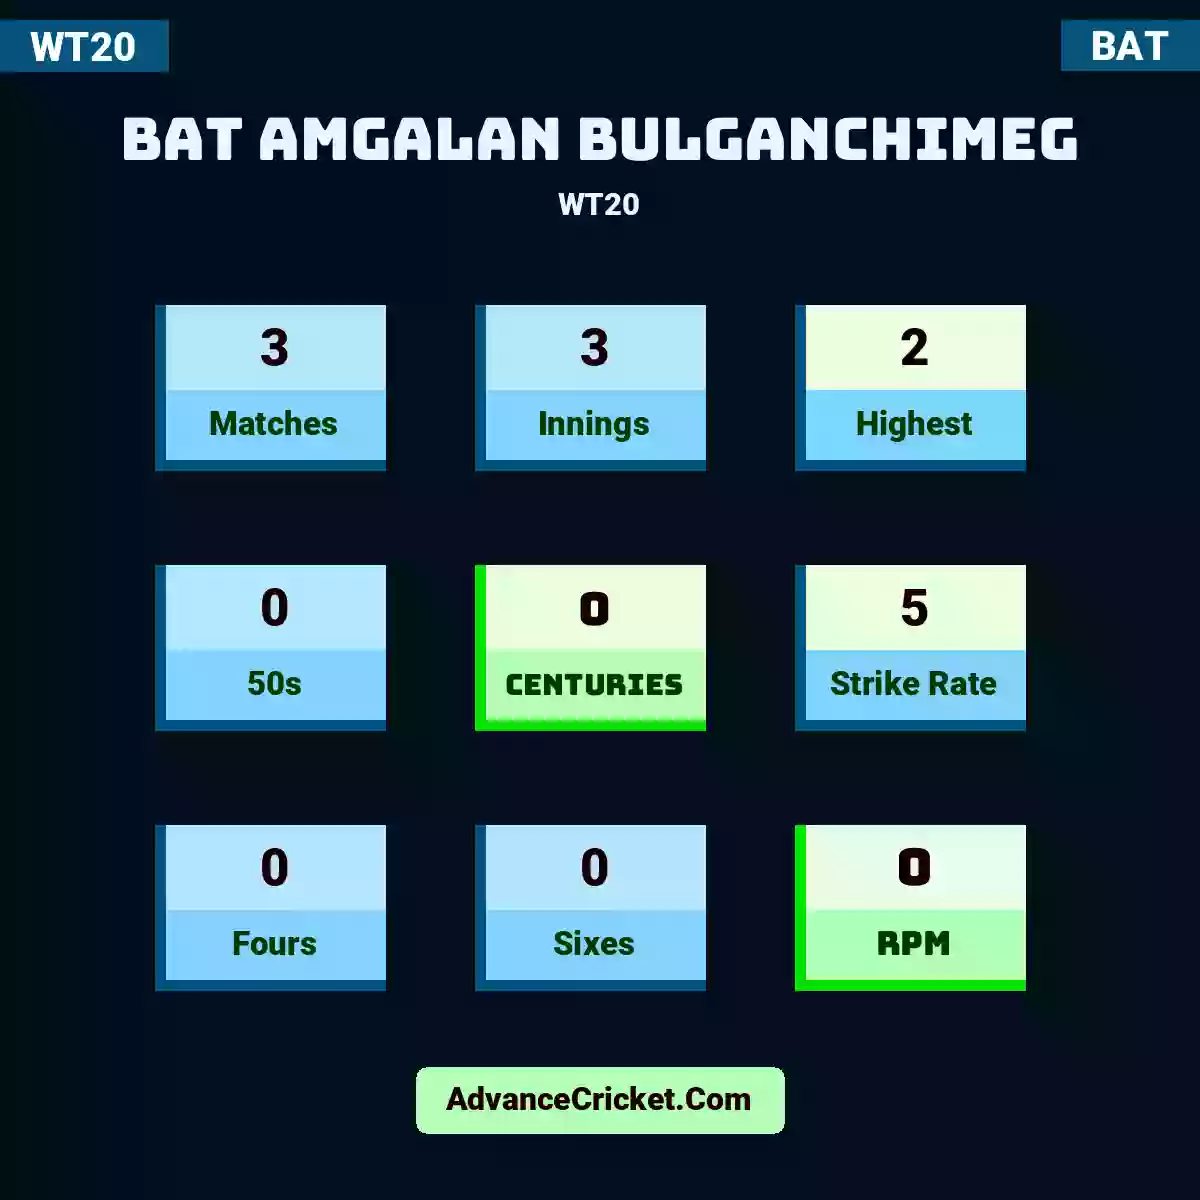 Bat Amgalan Bulganchimeg WT20 , Bat Amgalan Bulganchimeg played 3 matches, scored 2 runs as highest, 0 half-centuries, and 0 centuries, with a strike rate of 5. B.Amgalan.Bulganchimeg hit 0 fours and 0 sixes, with an RPM of 0.